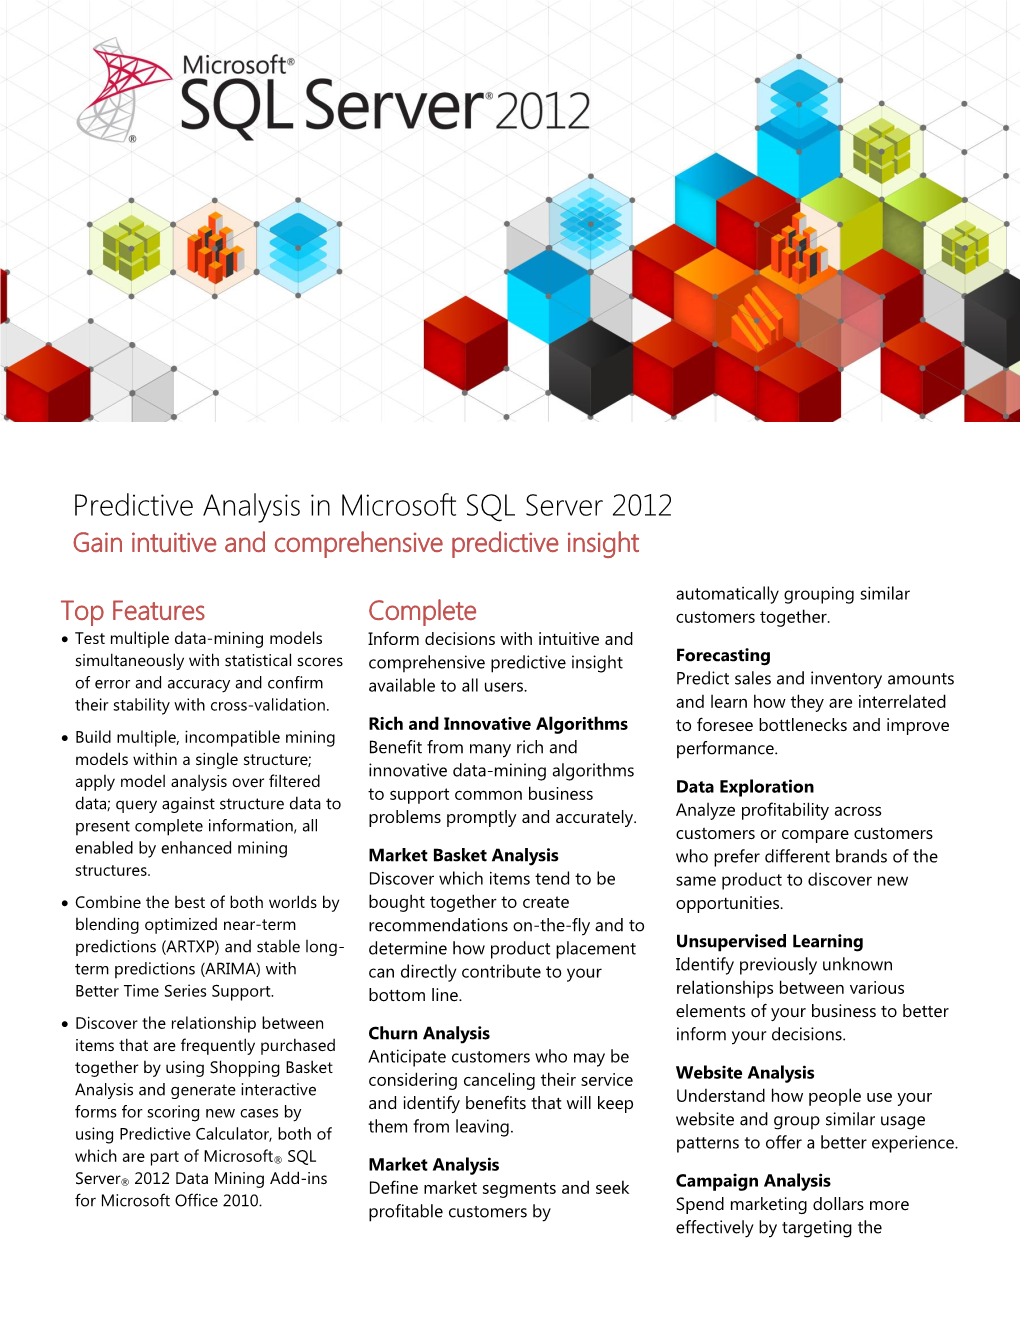 Predictive Analysis in Microsoft SQL Server 2012 Gain Intuitive and Comprehensive Predictive Insight